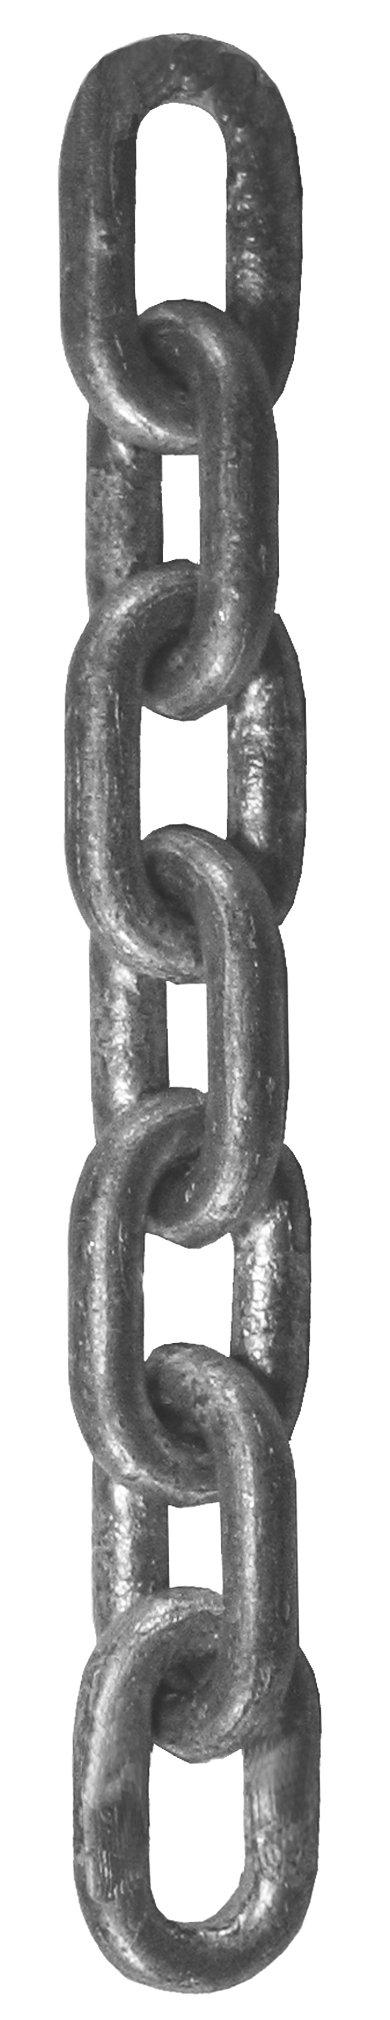 Stainless Steel Short Link Chain (Grade 316)